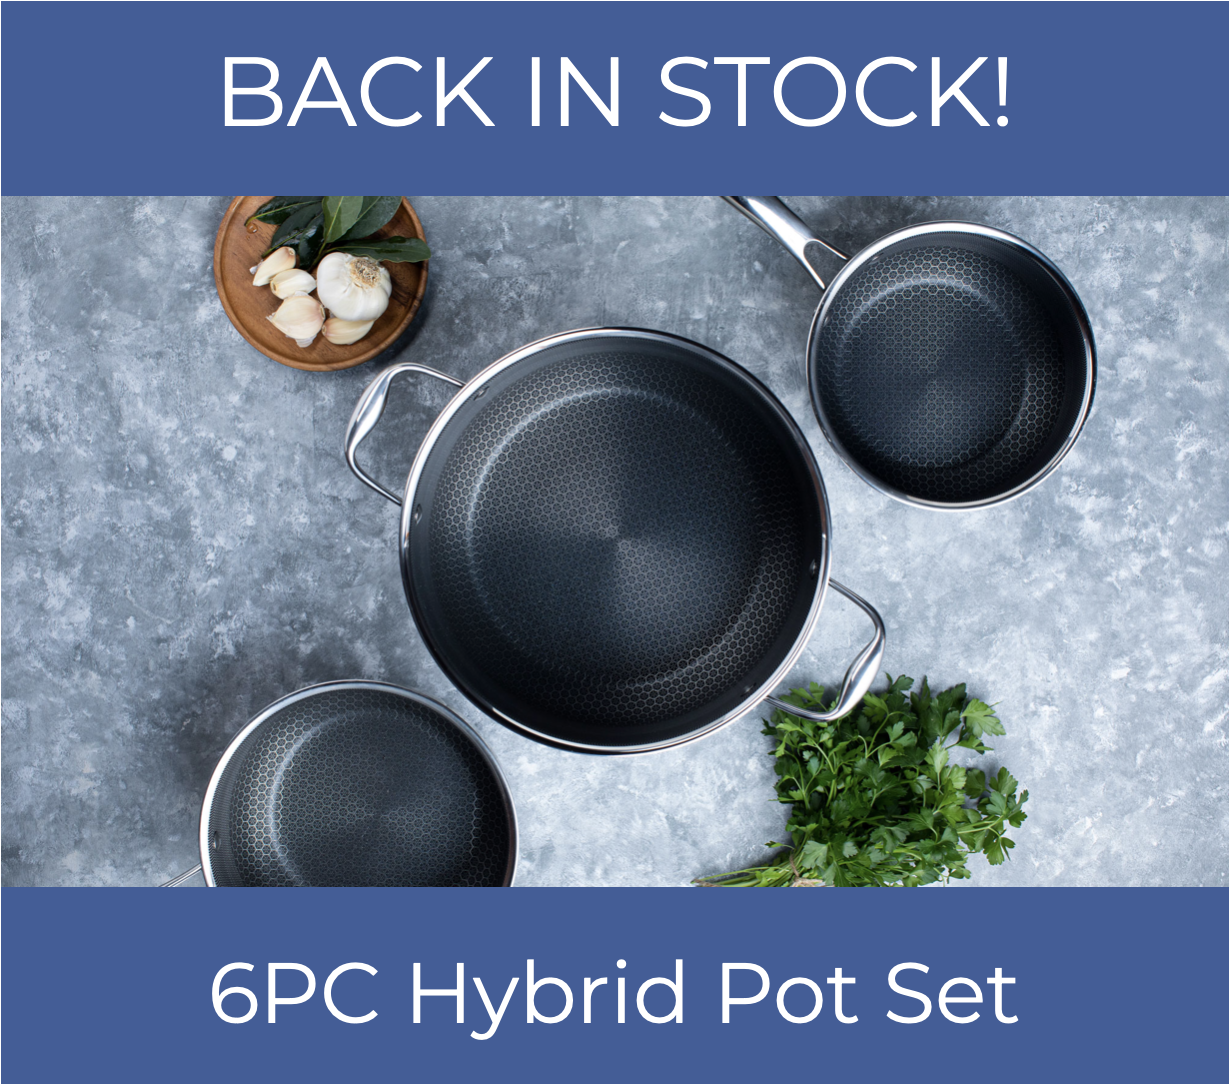 Hexclad 6 piece Hybrid Cookware Set Is Fantastic! 